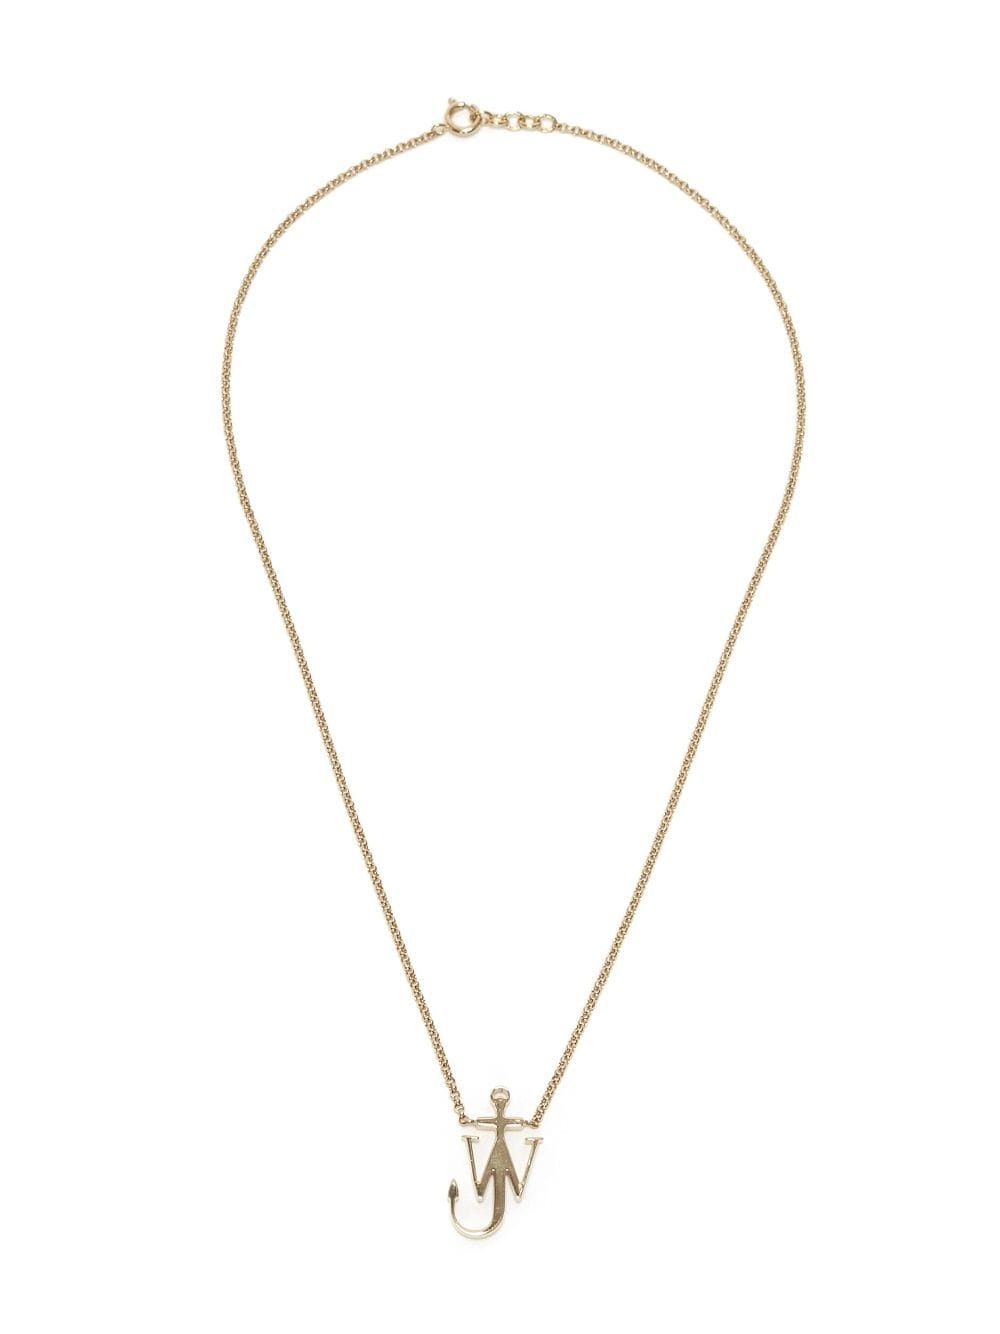 Anchor pendant necklace - 2